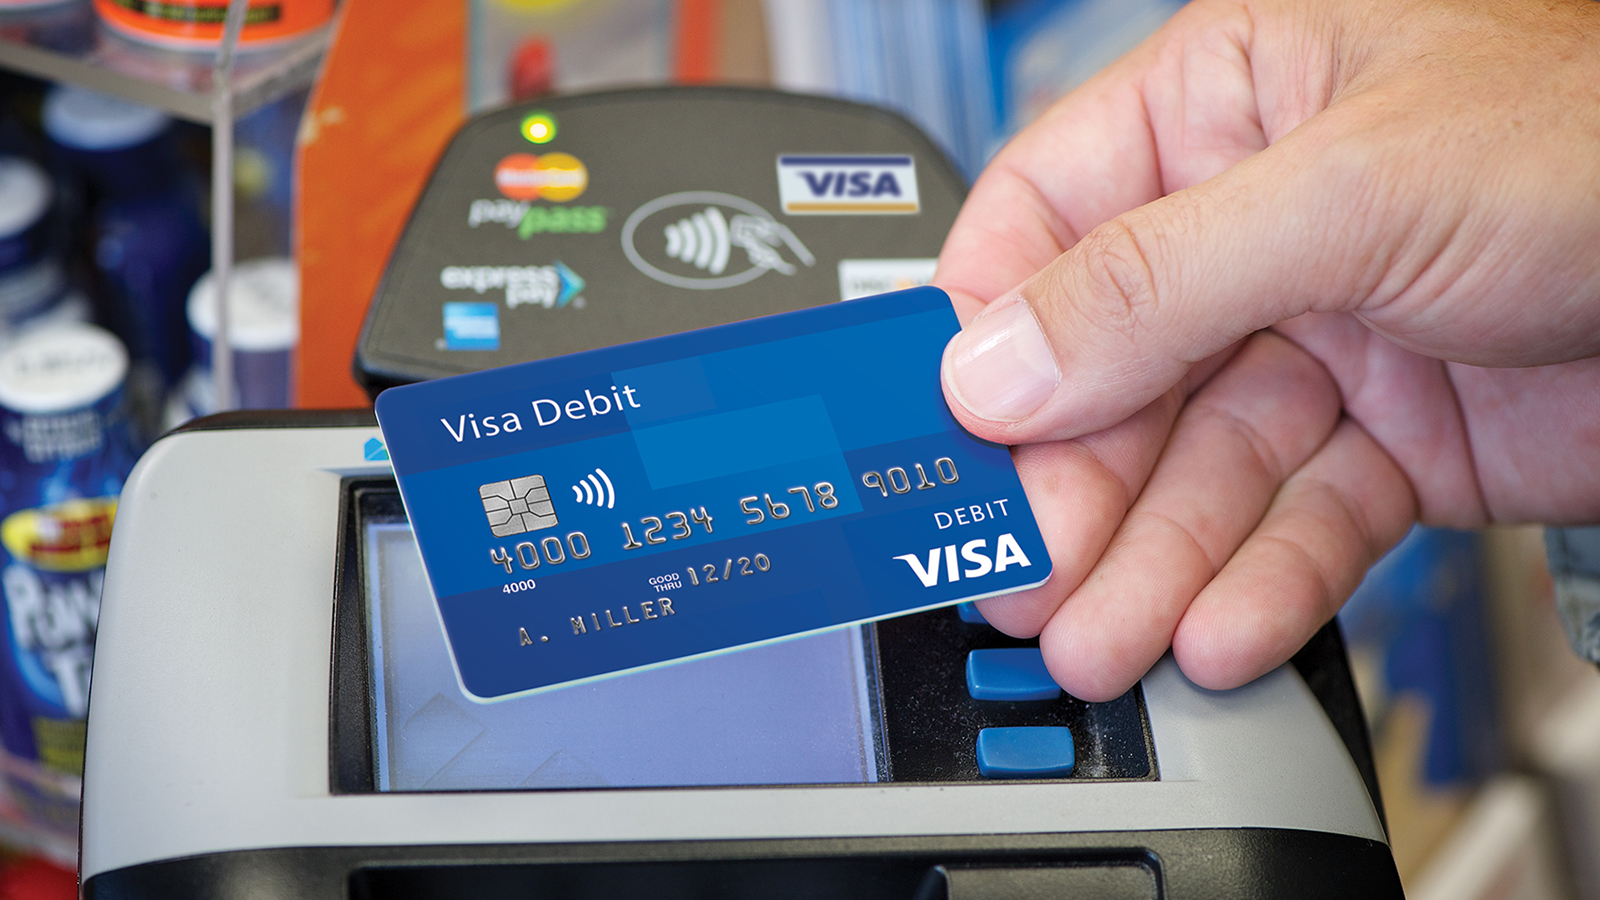 Person using a Visa payWave debit card at a payment terminal.